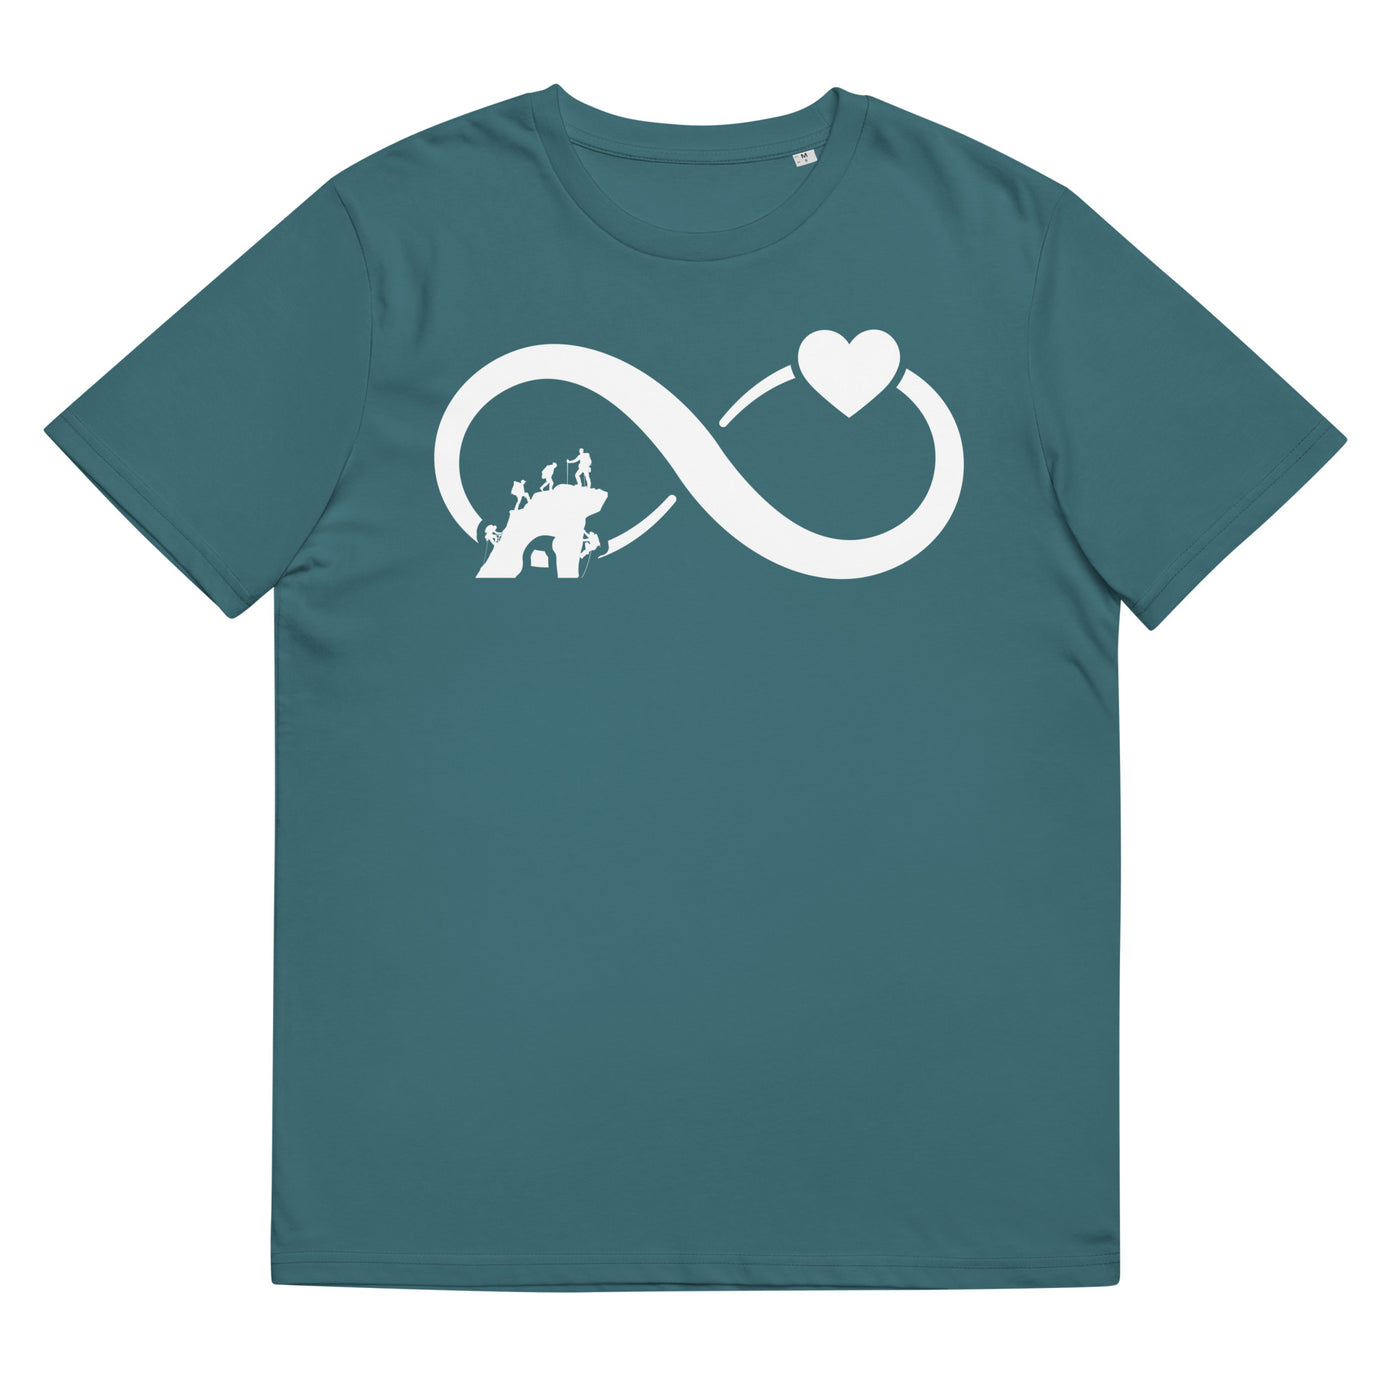 Infinity Heart and Climbing - Herren Premium Organic T-Shirt klettern xxx yyy zzz Stargazer